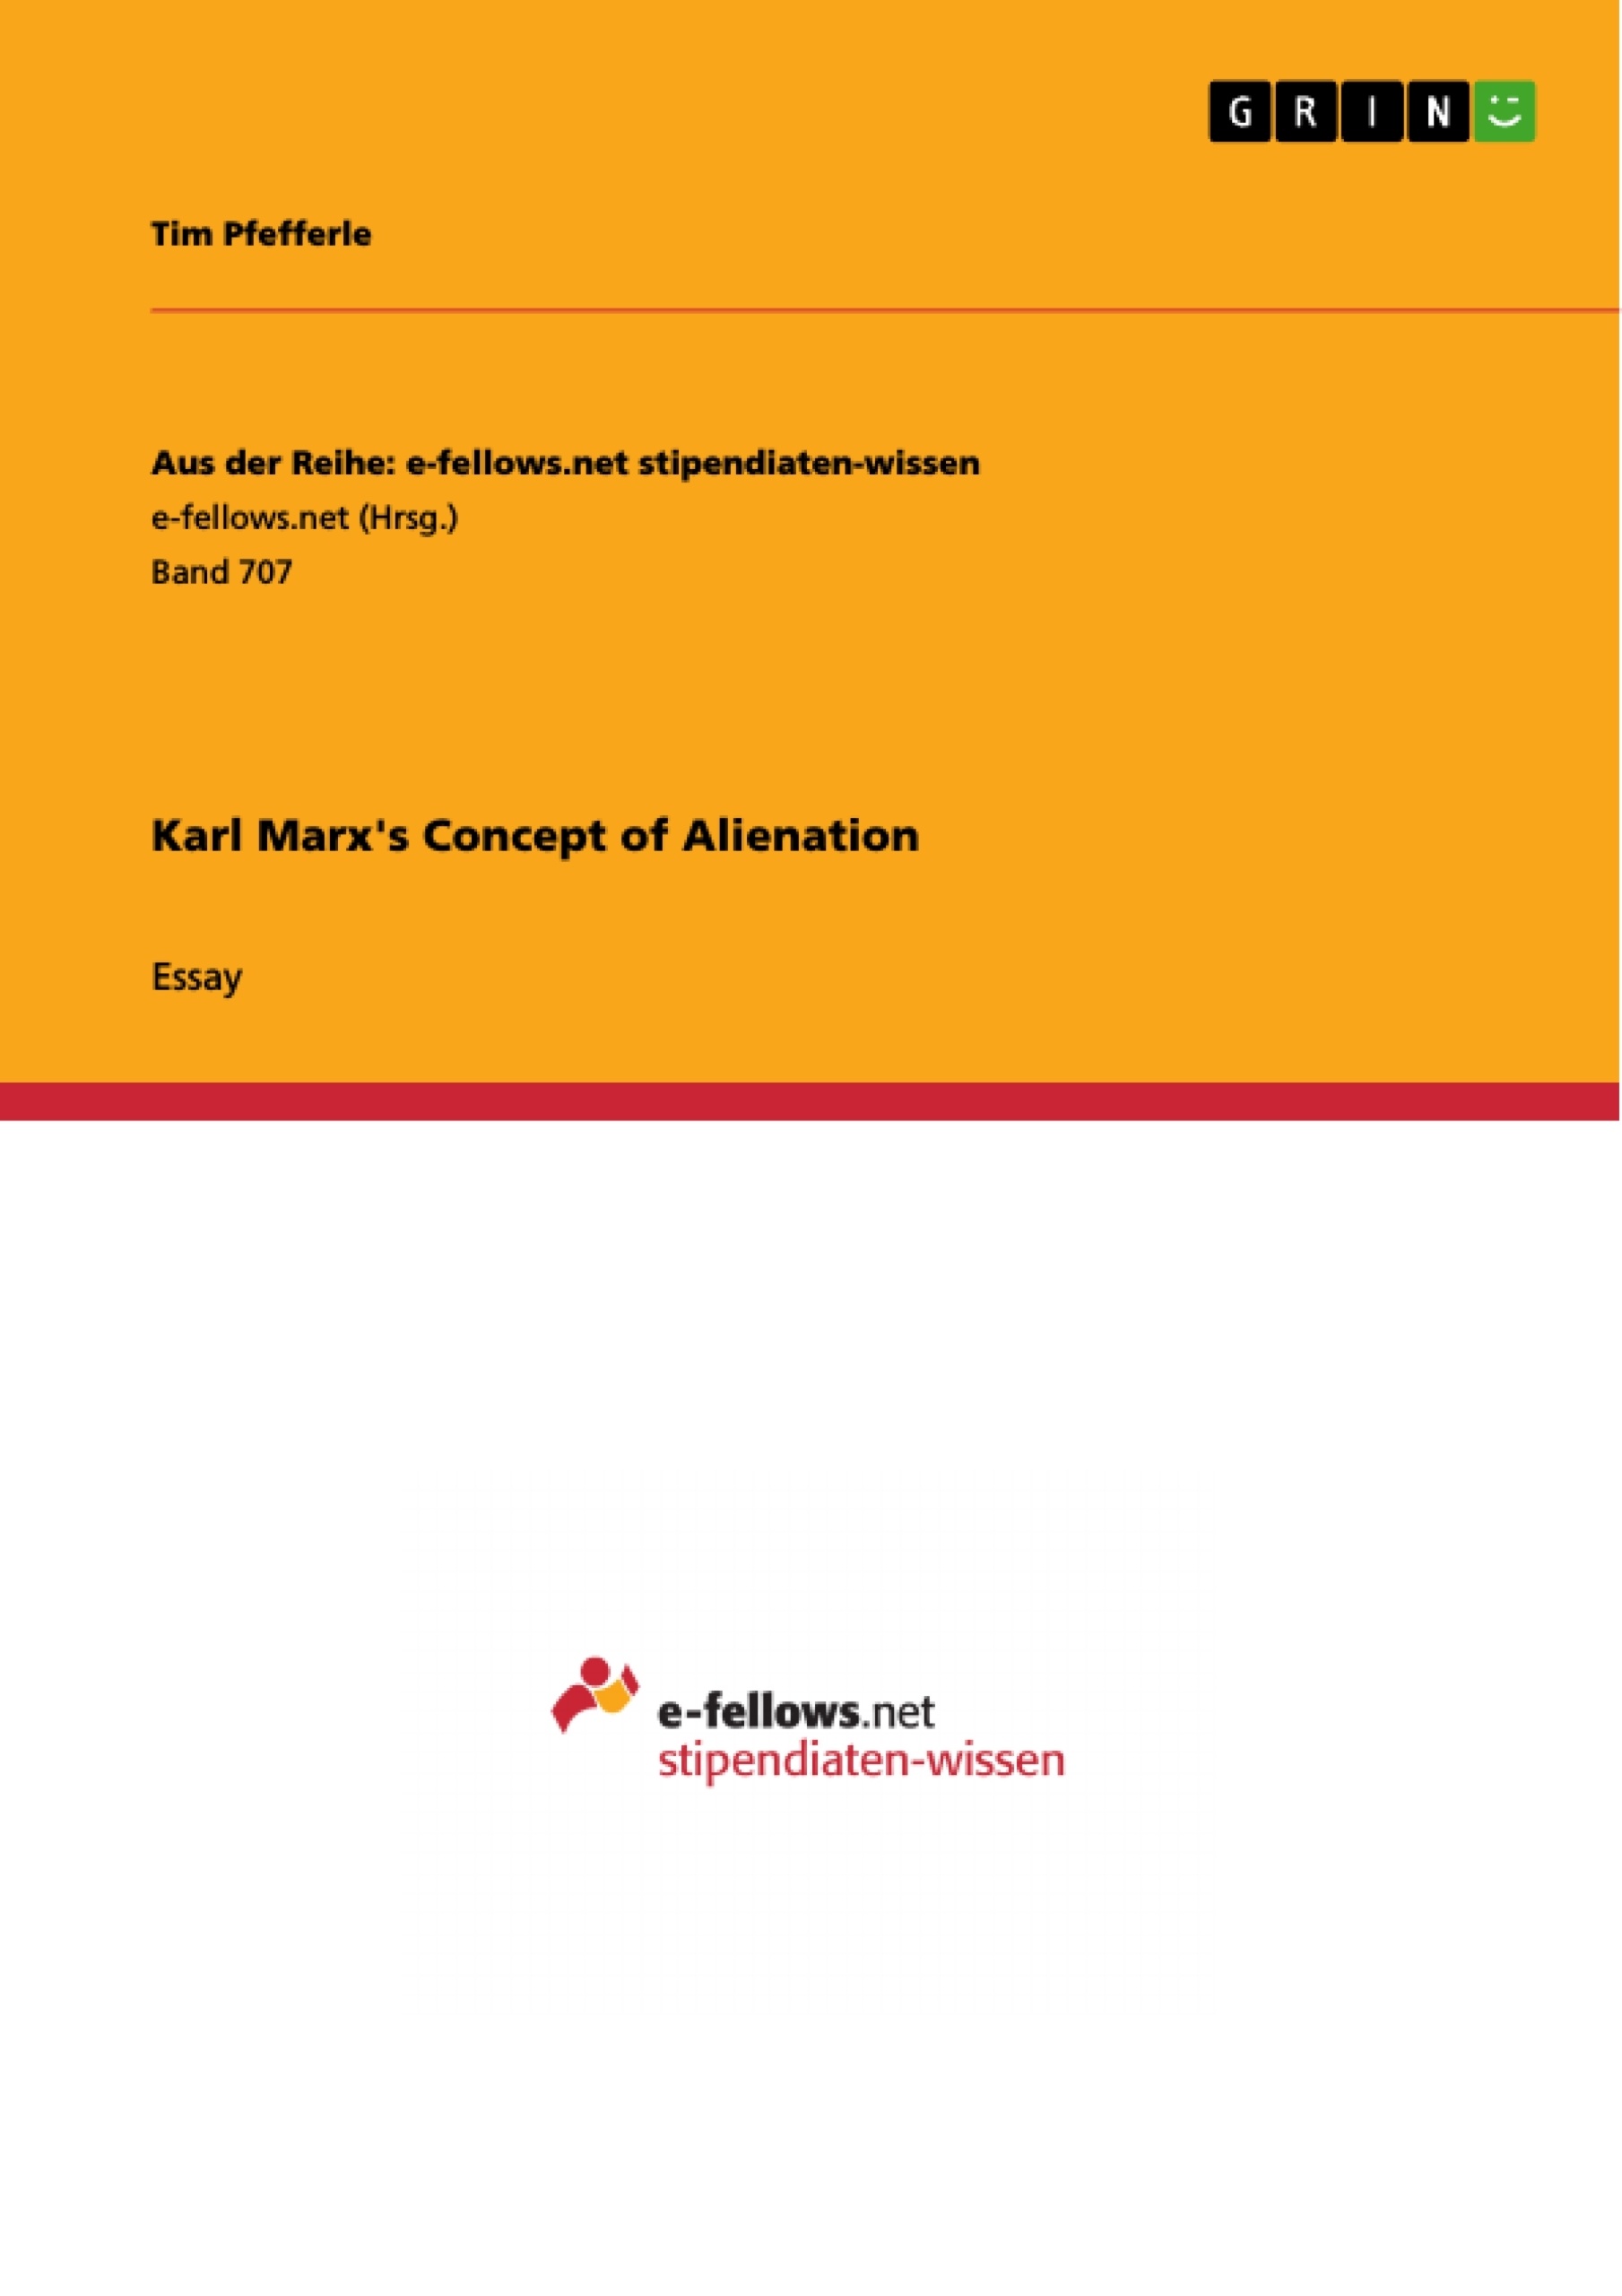 Title: Karl Marx's Concept of Alienation